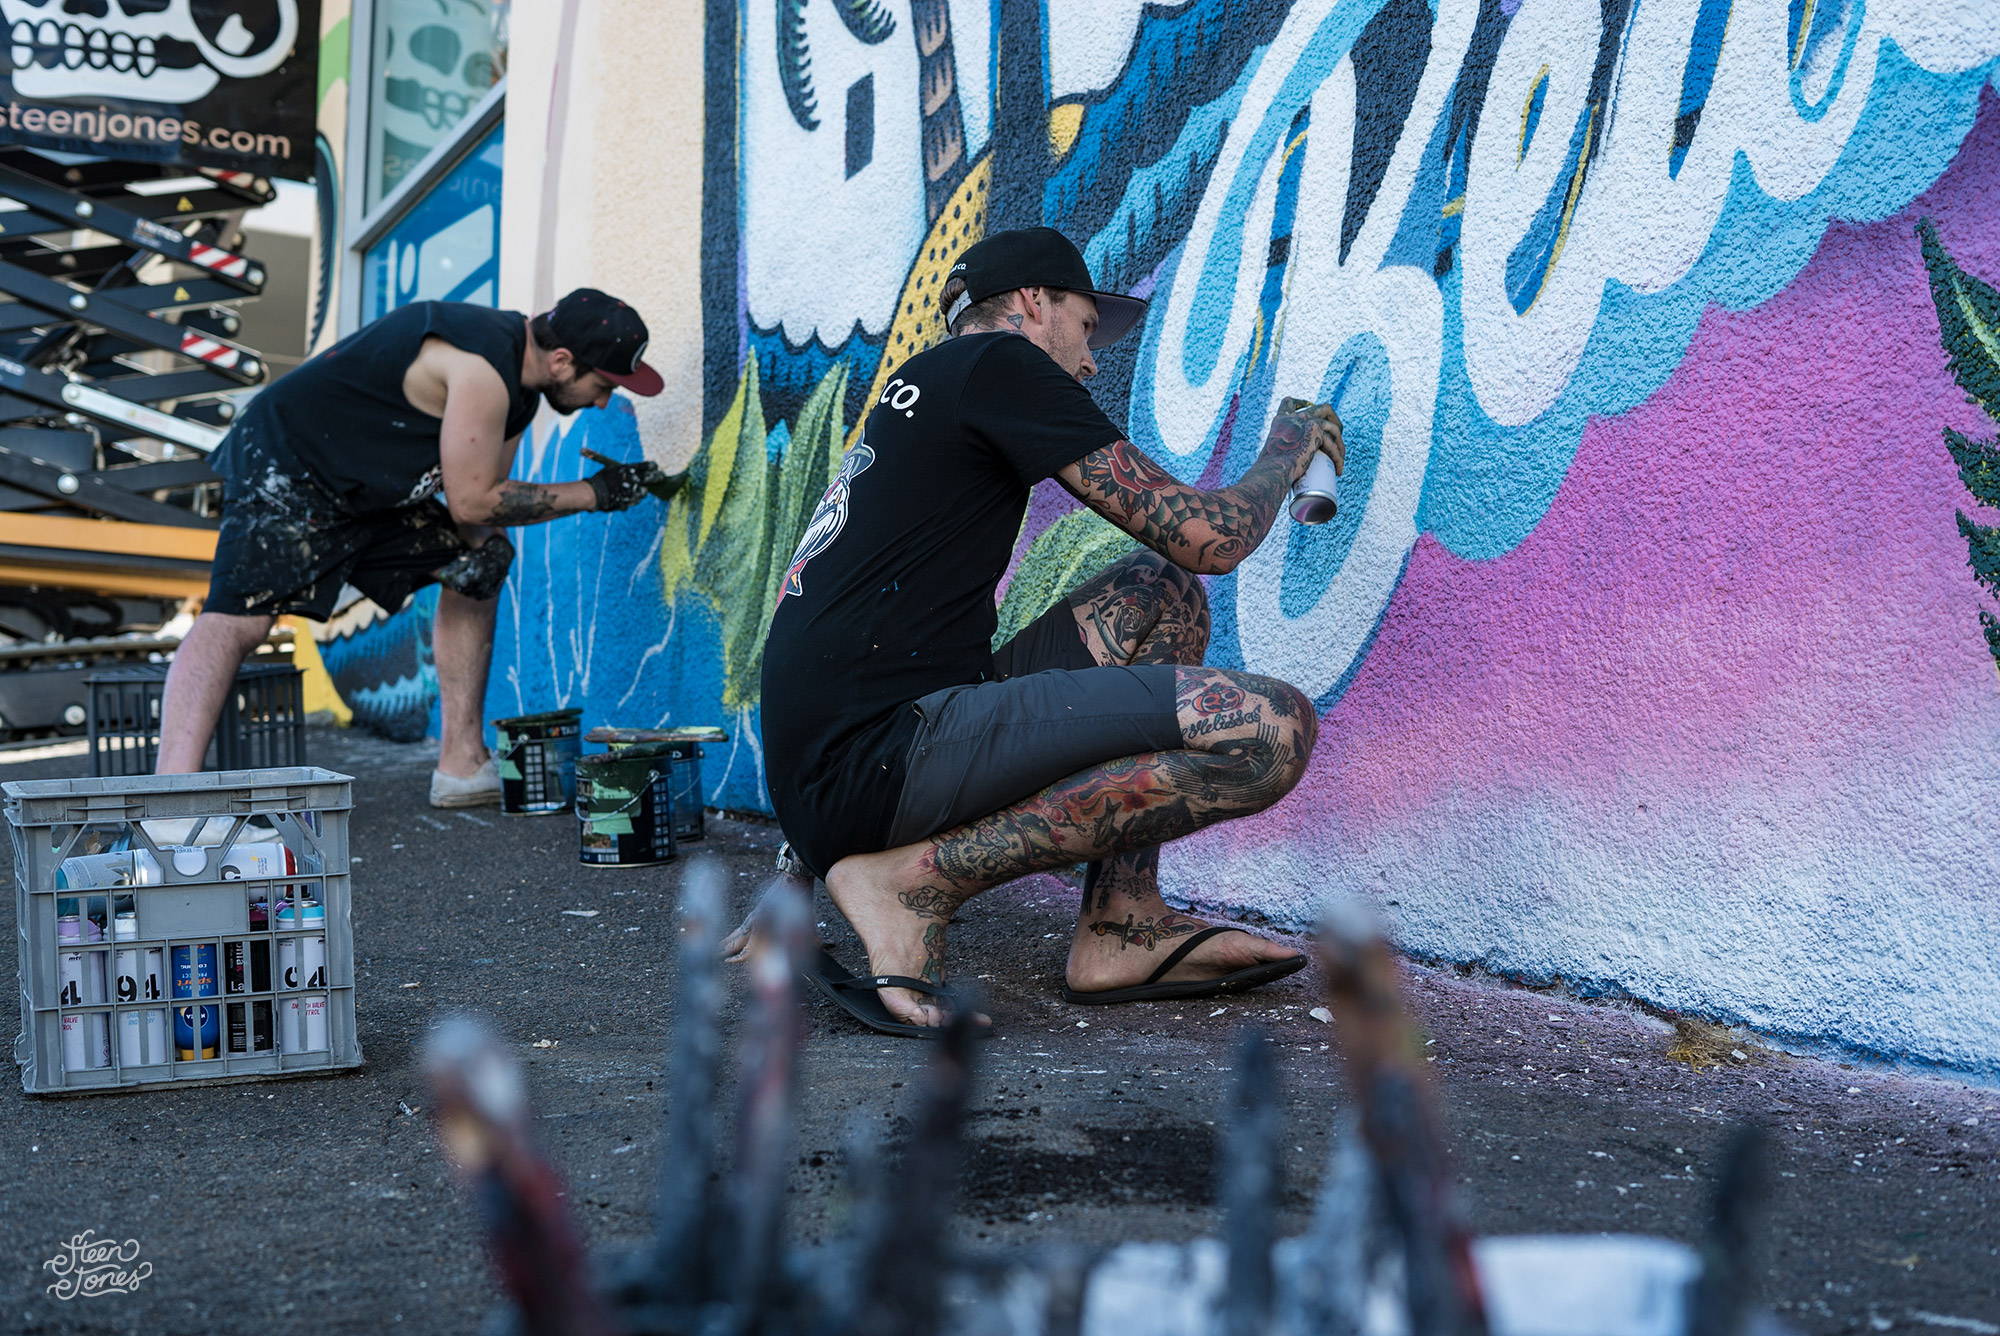 Steen Jones tattoo street artist Australia Authority Creative Alex Lehours Noahs Backpackers Hi from Bondi 